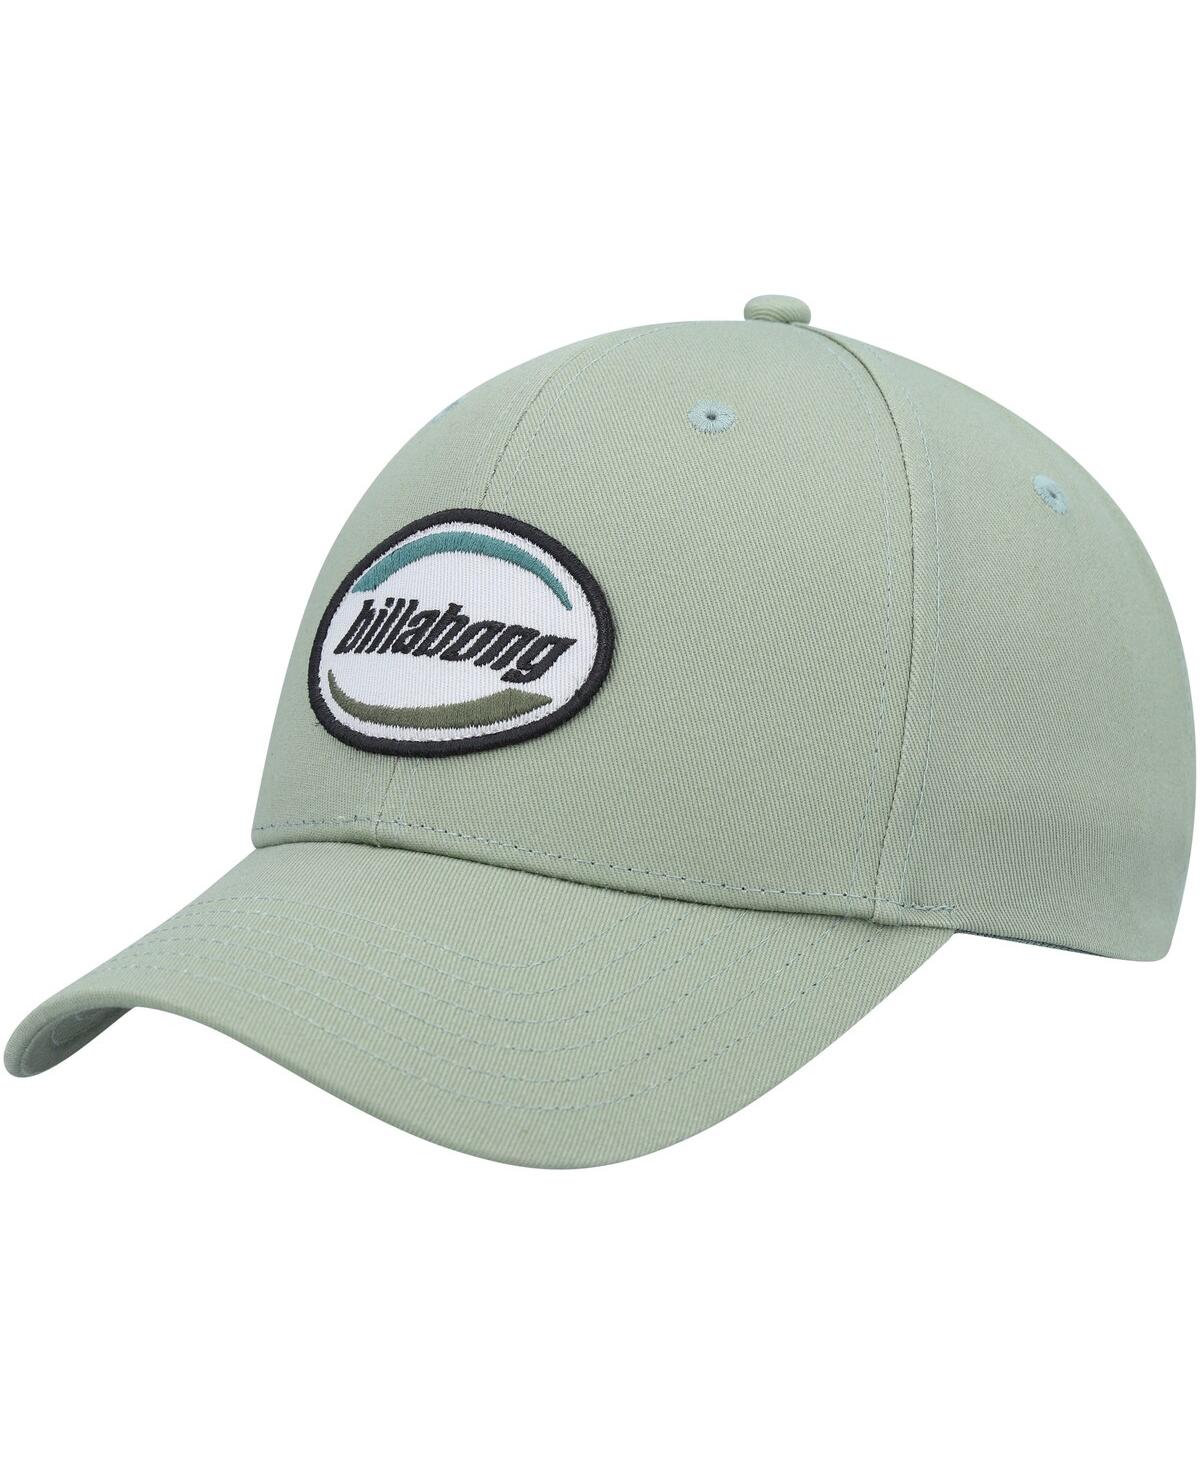 Shop Billabong Men's  Green Walled Snapback Hat